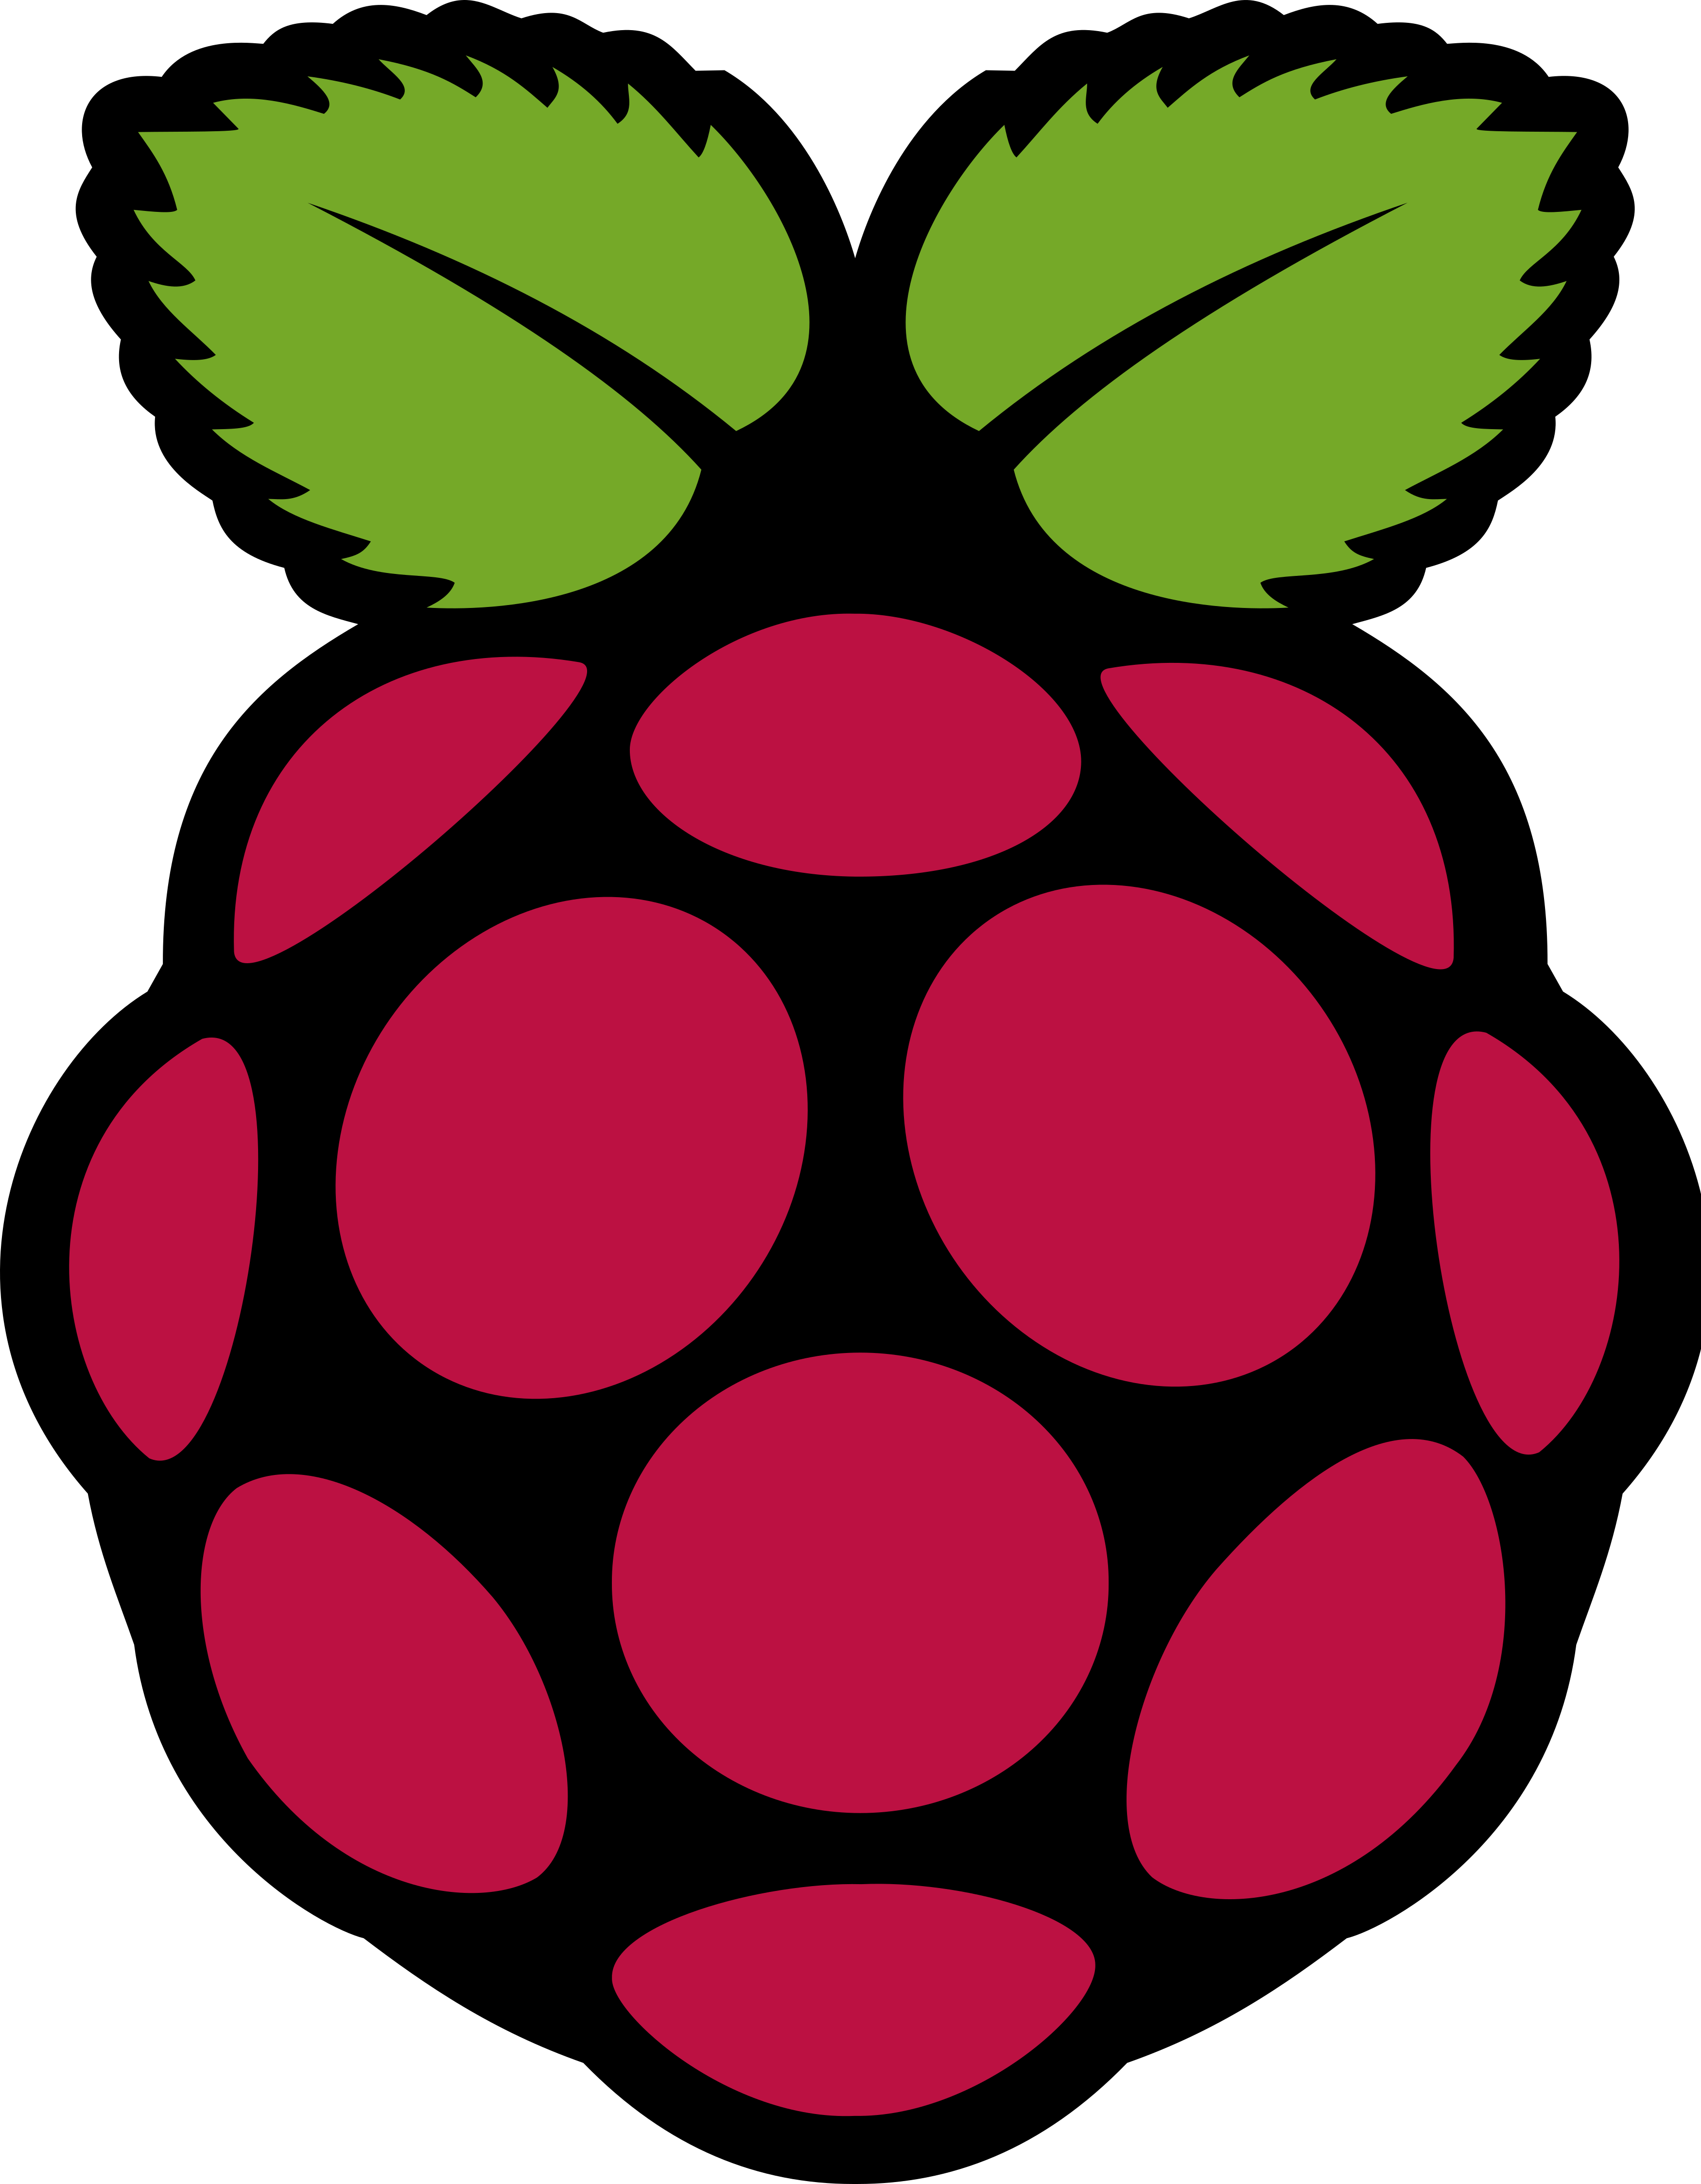 raspberry pi logo.